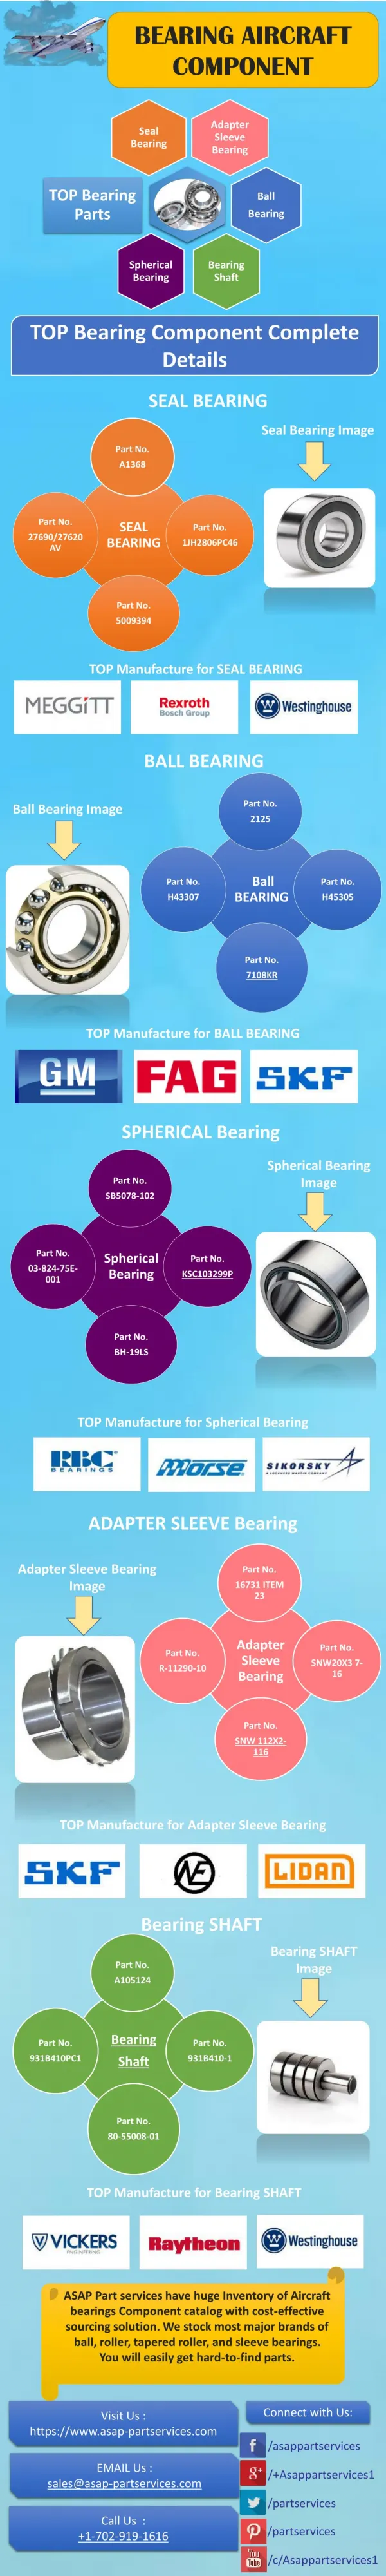 Aerospace Bearing Distributor - ASAP Part Services